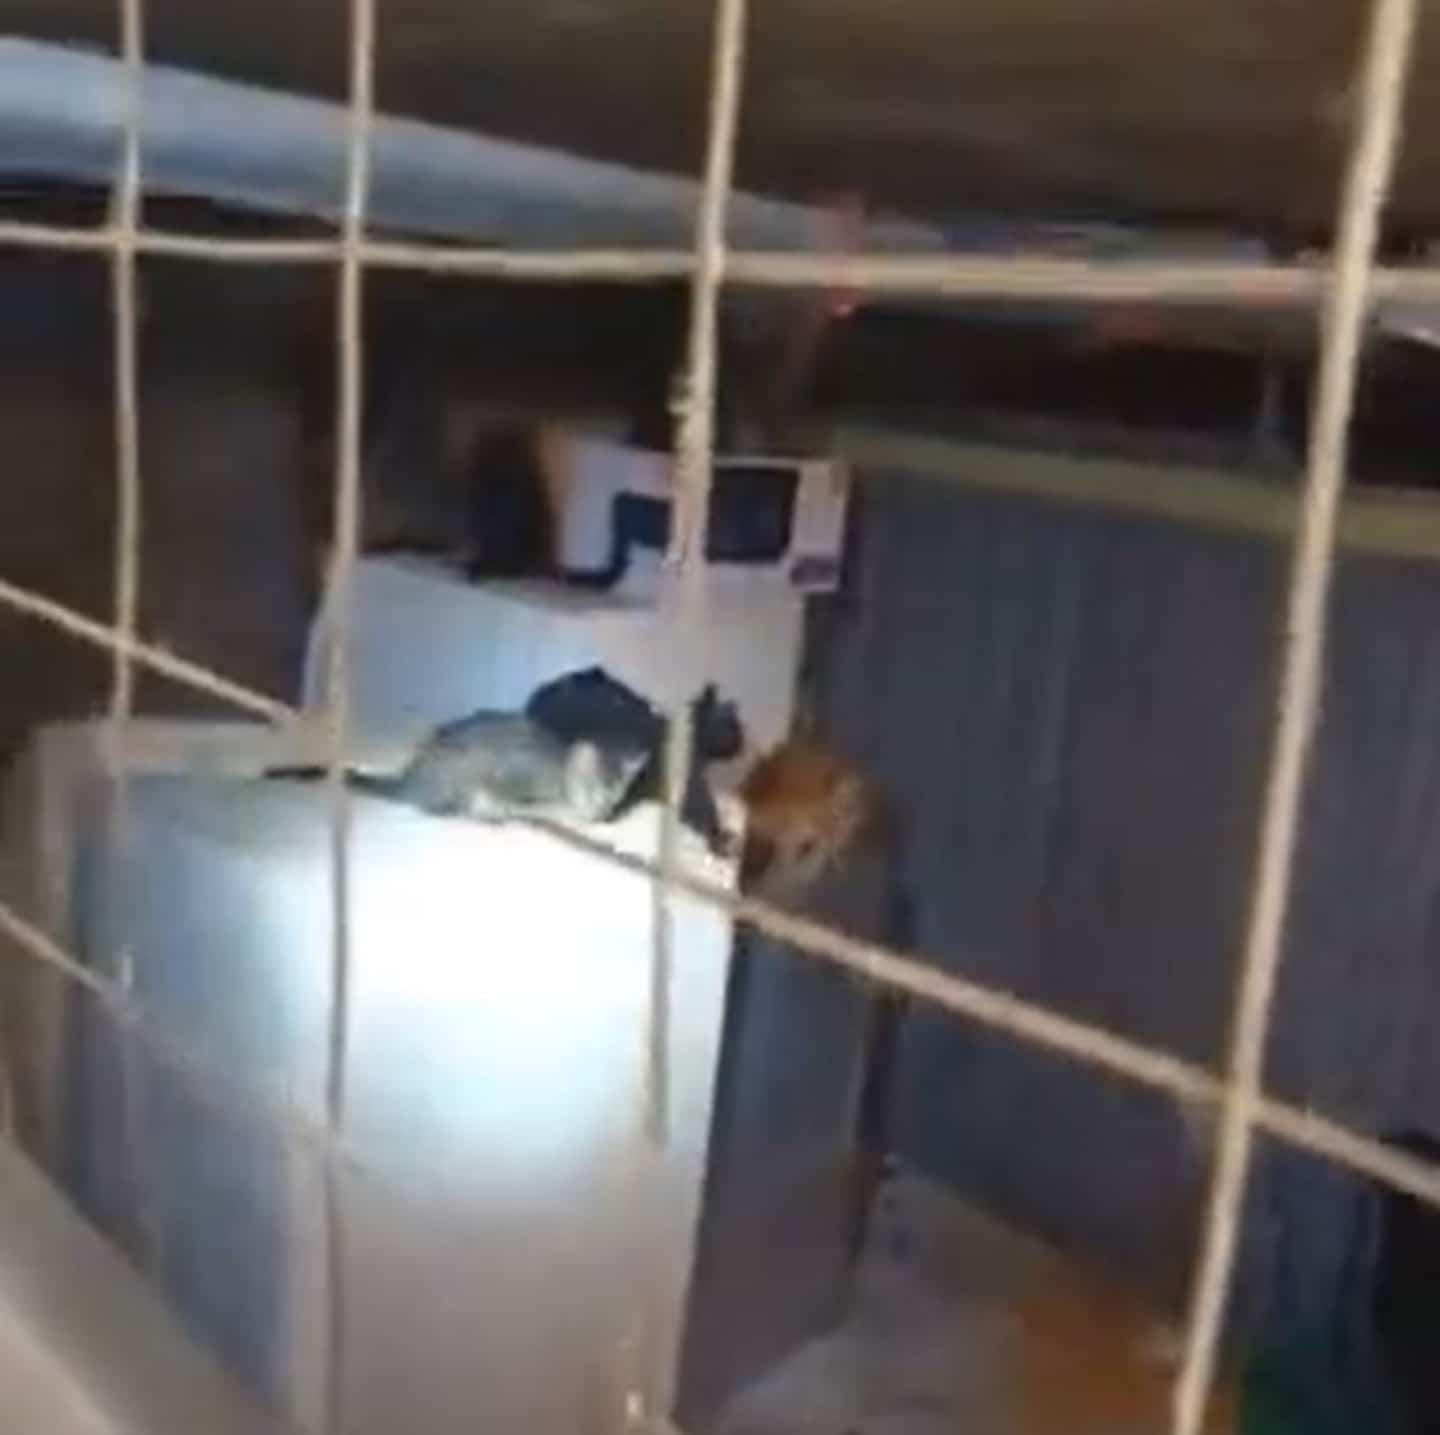 Twenty cats found in an “unsanitary” warehouse